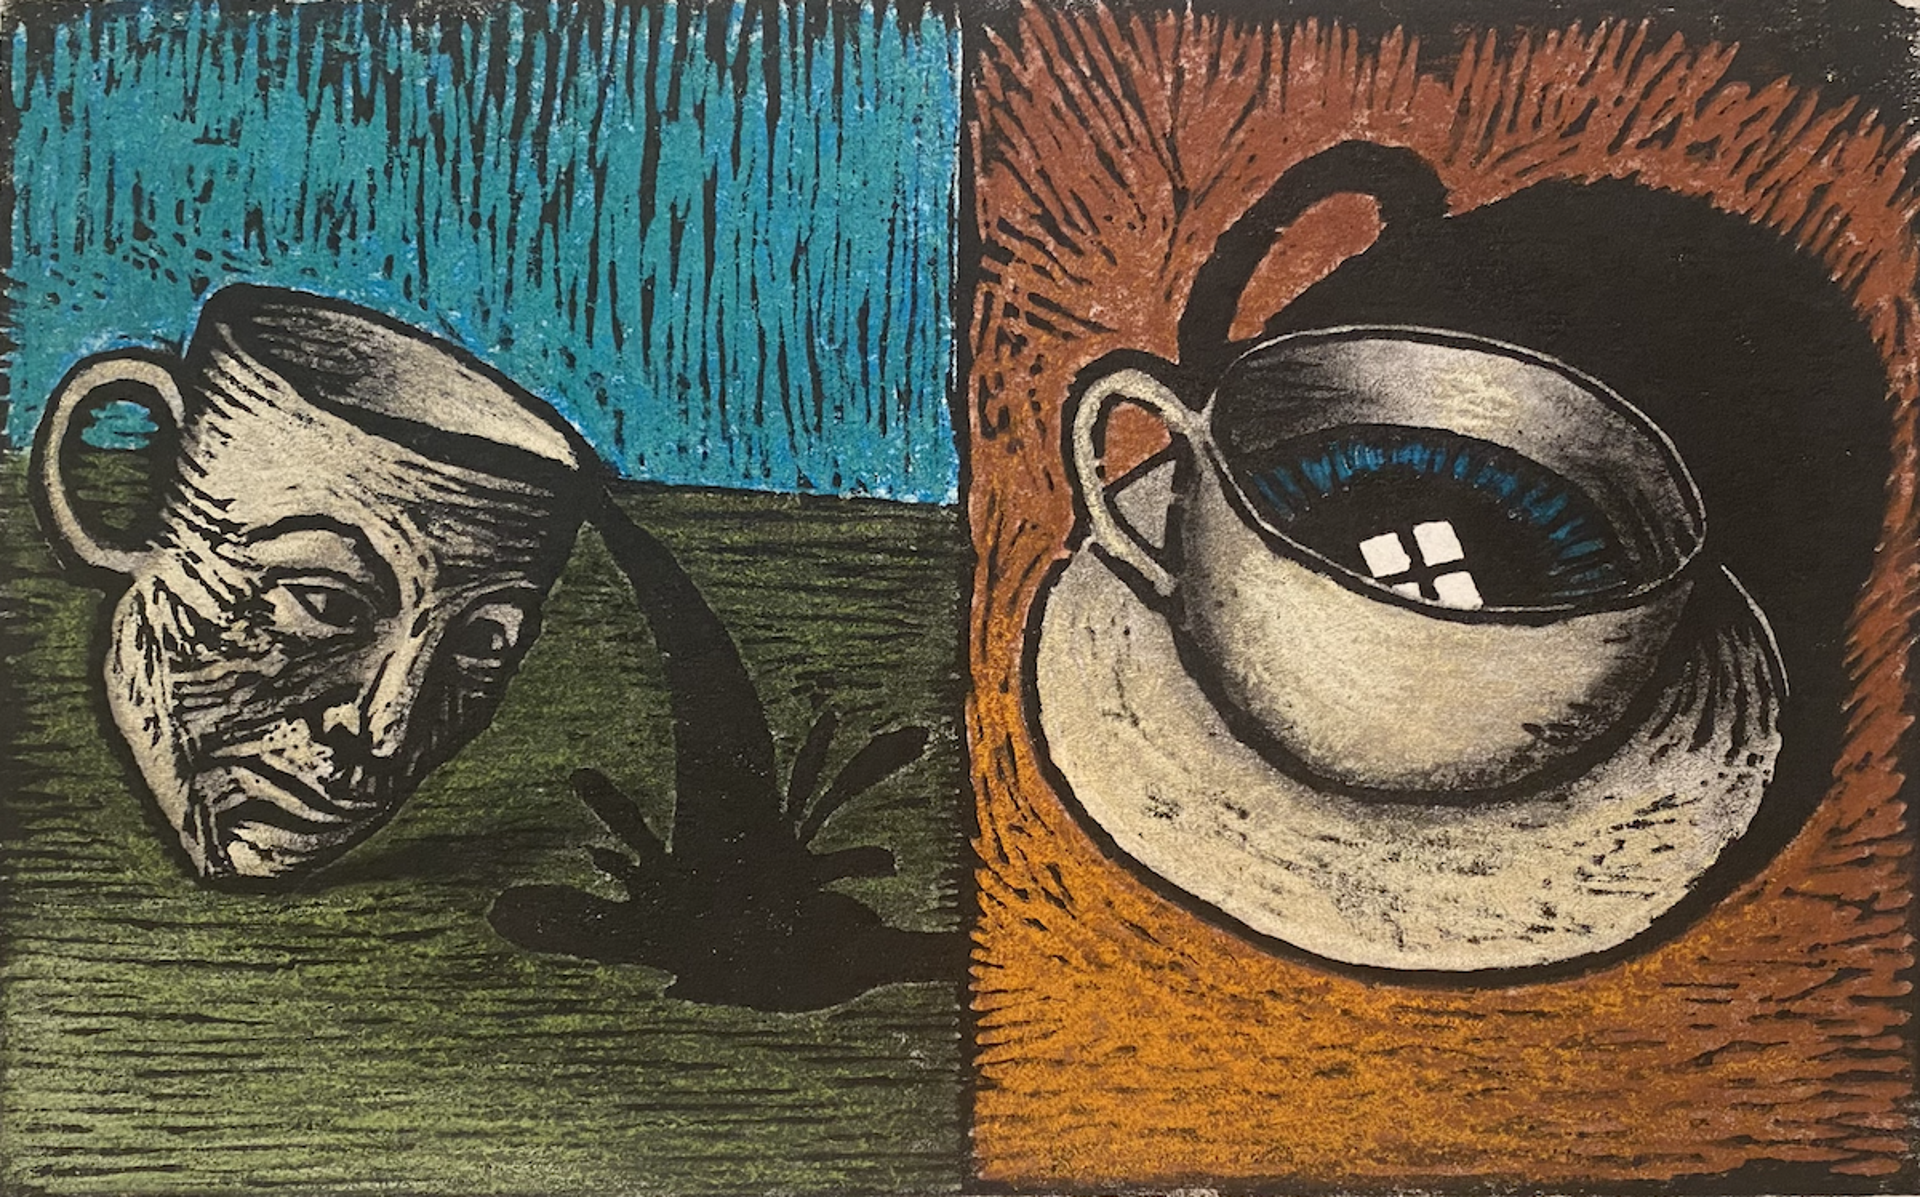 Coffee Mug/Eye Cup (12/24) by Jeff Donovan